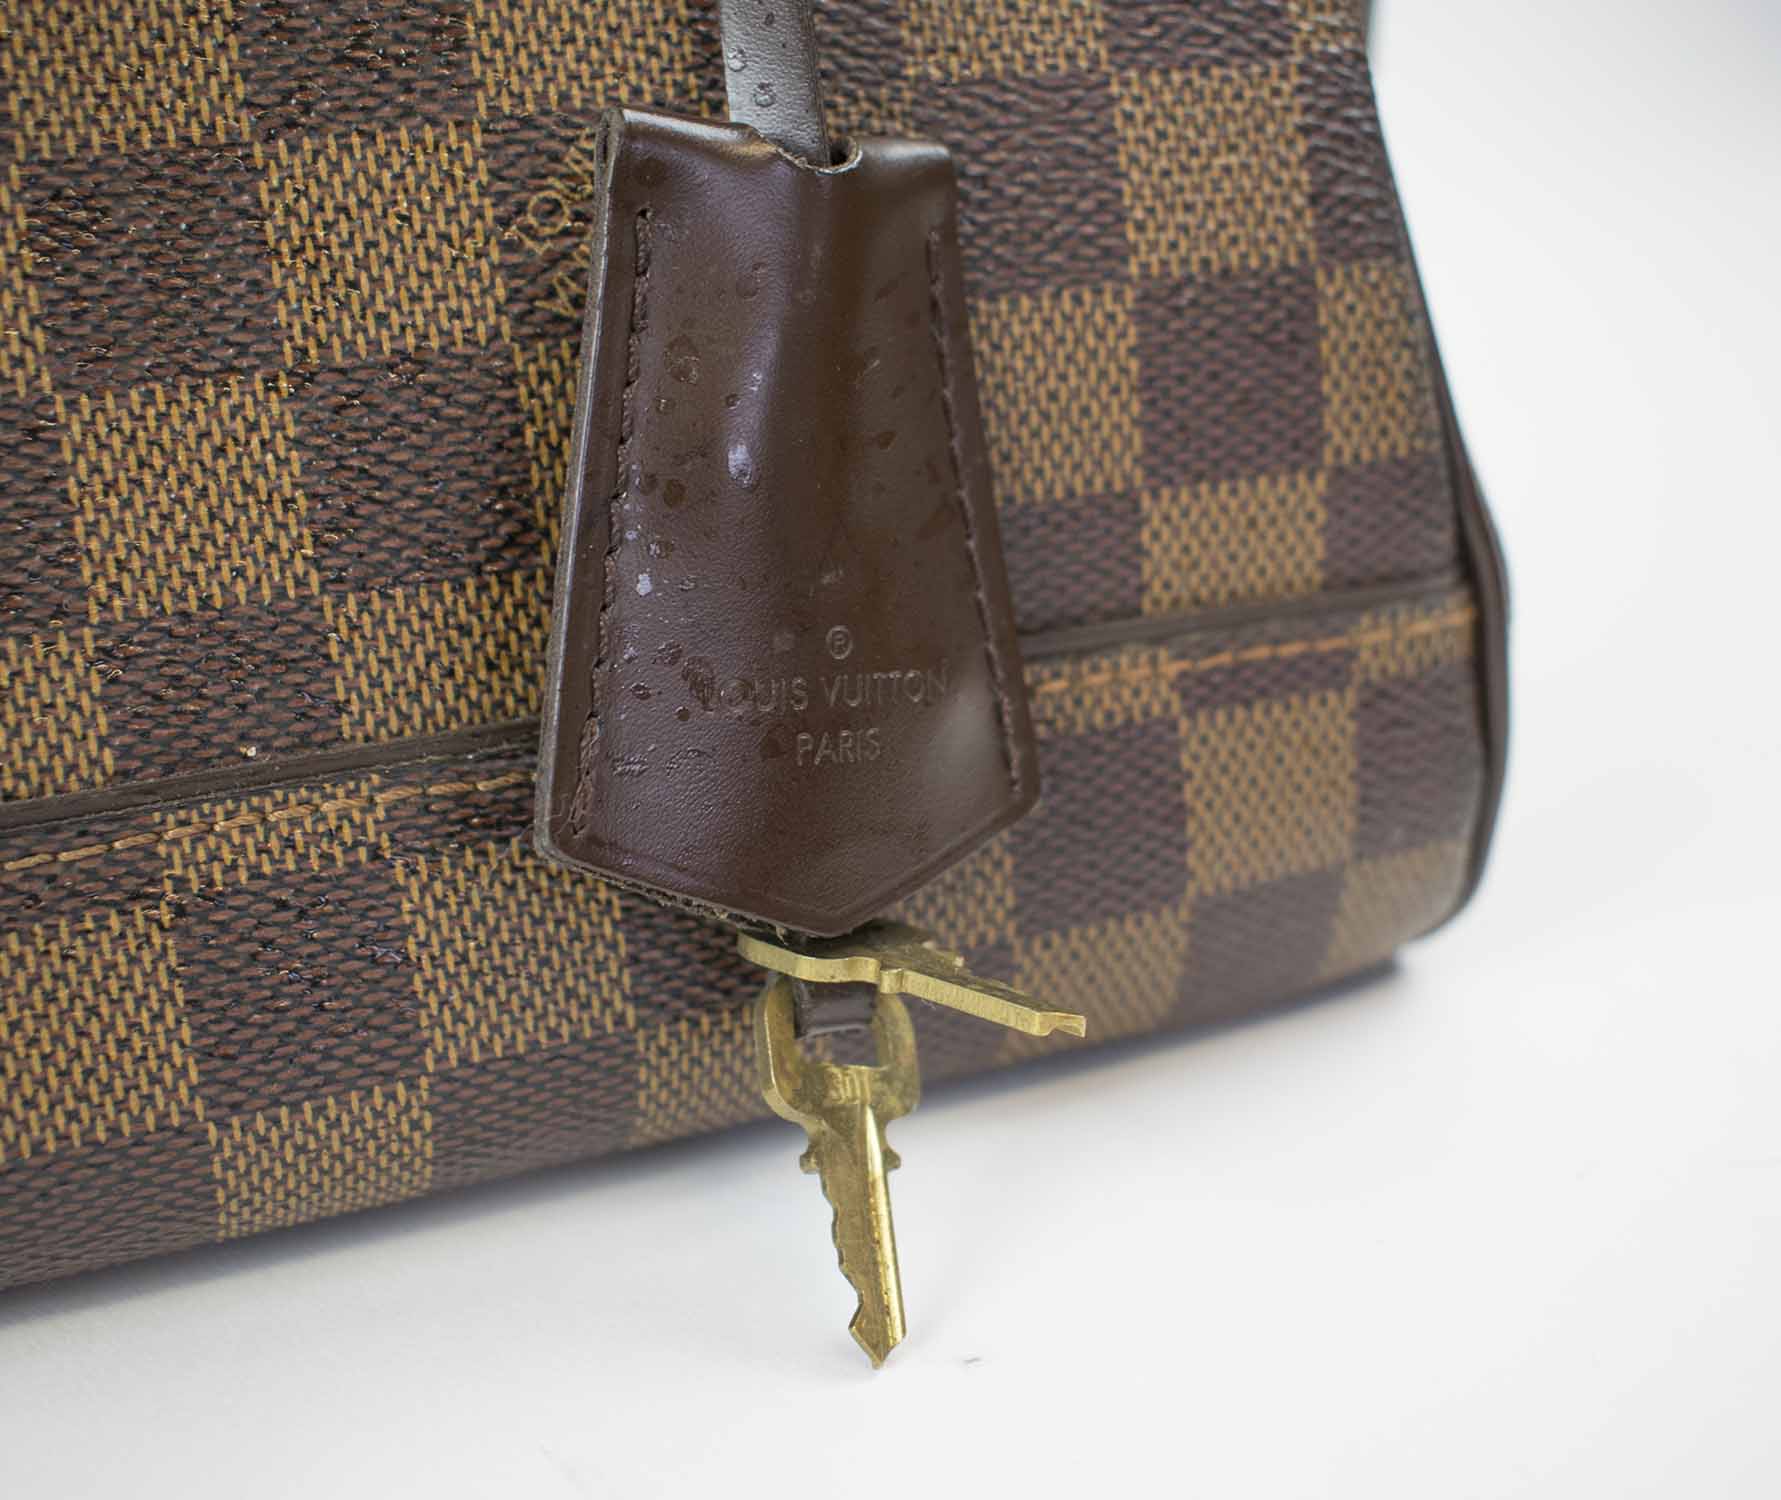 Sold at Auction: Louis Vuitton Alma PM With Shoulder Strap. 32cm W